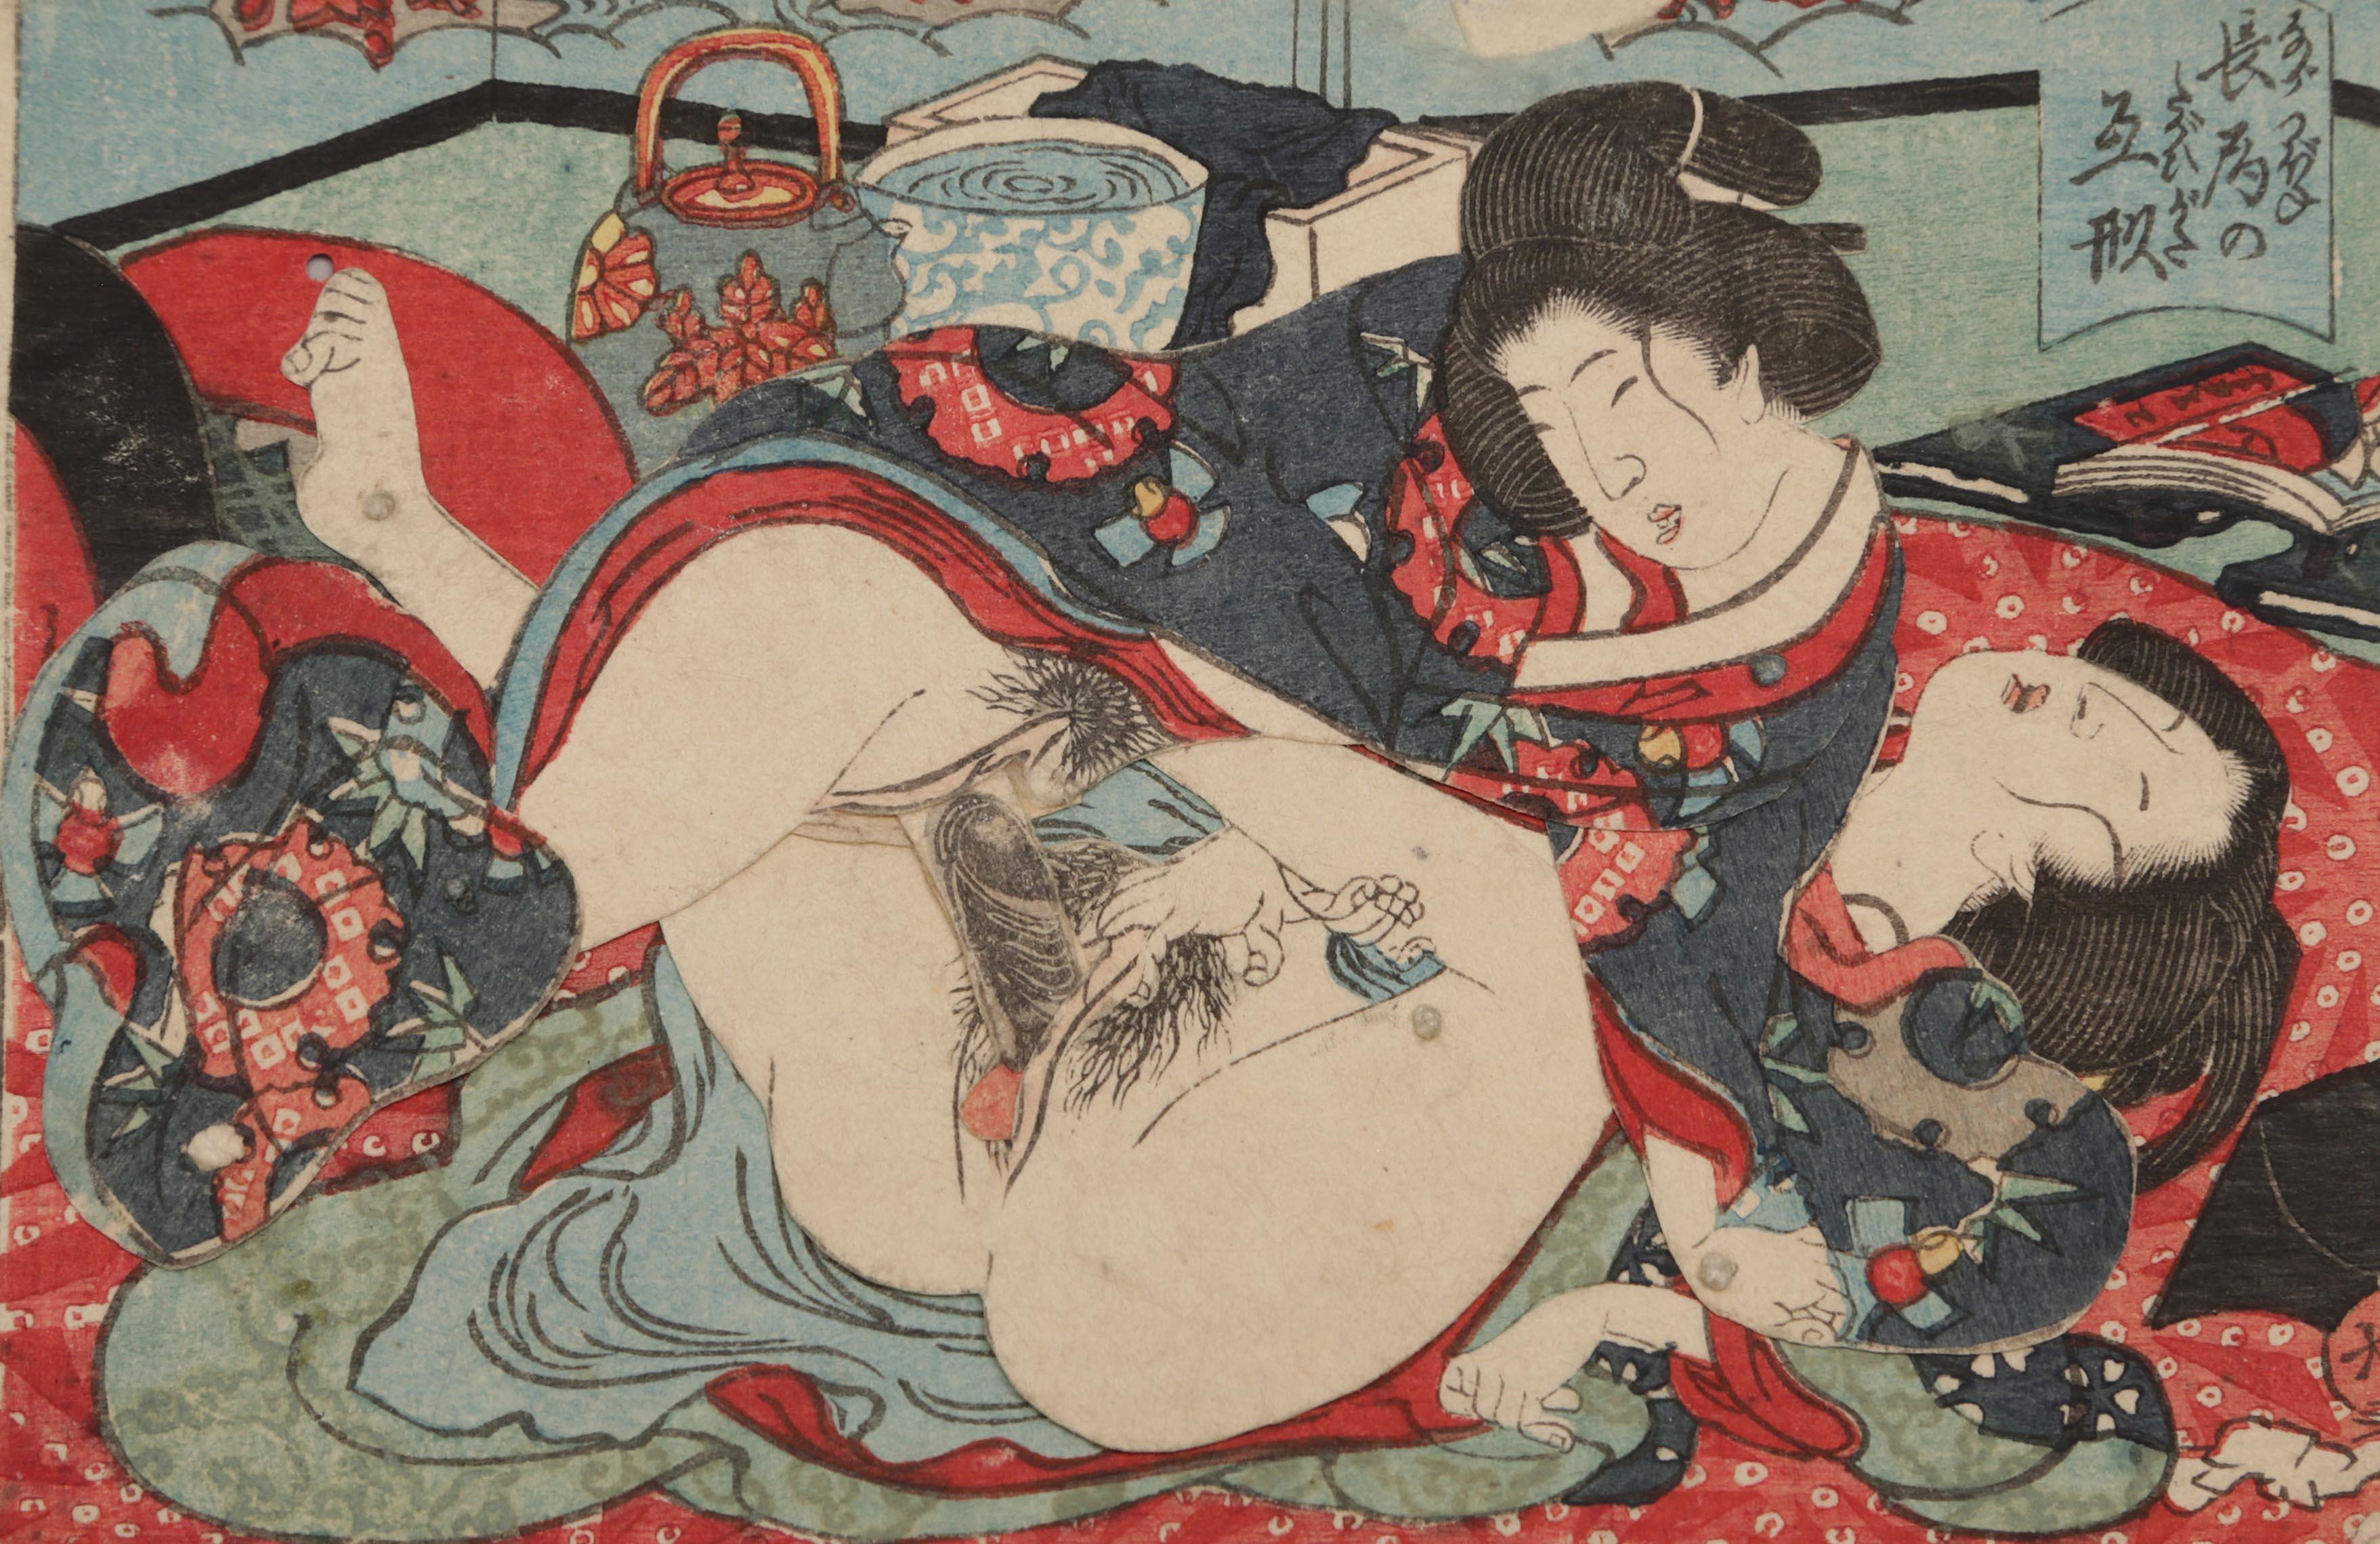 Articulated shunga scene involving two women. 